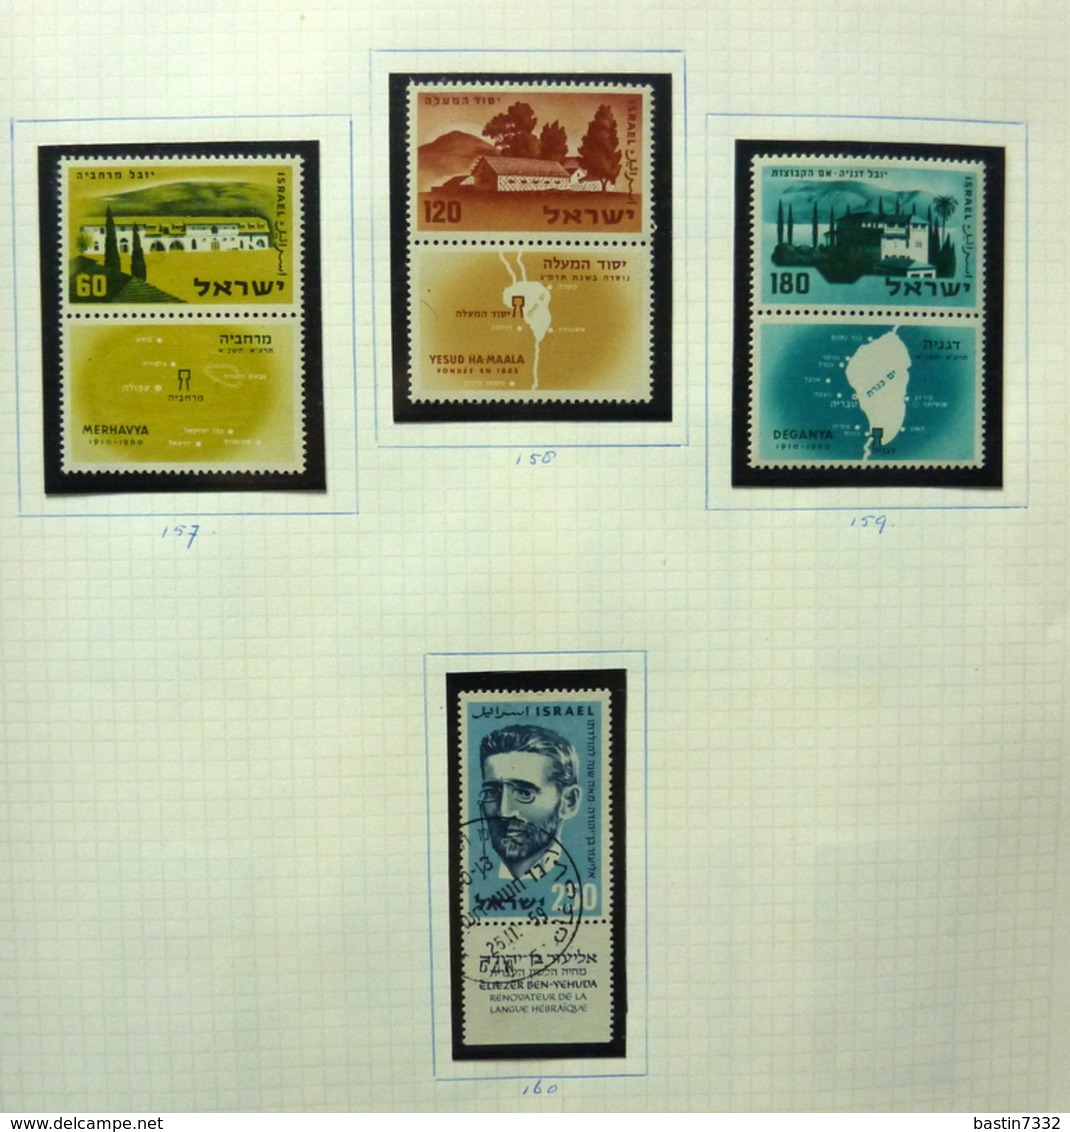 Israel collection in Importa Victoria album 1948-1972